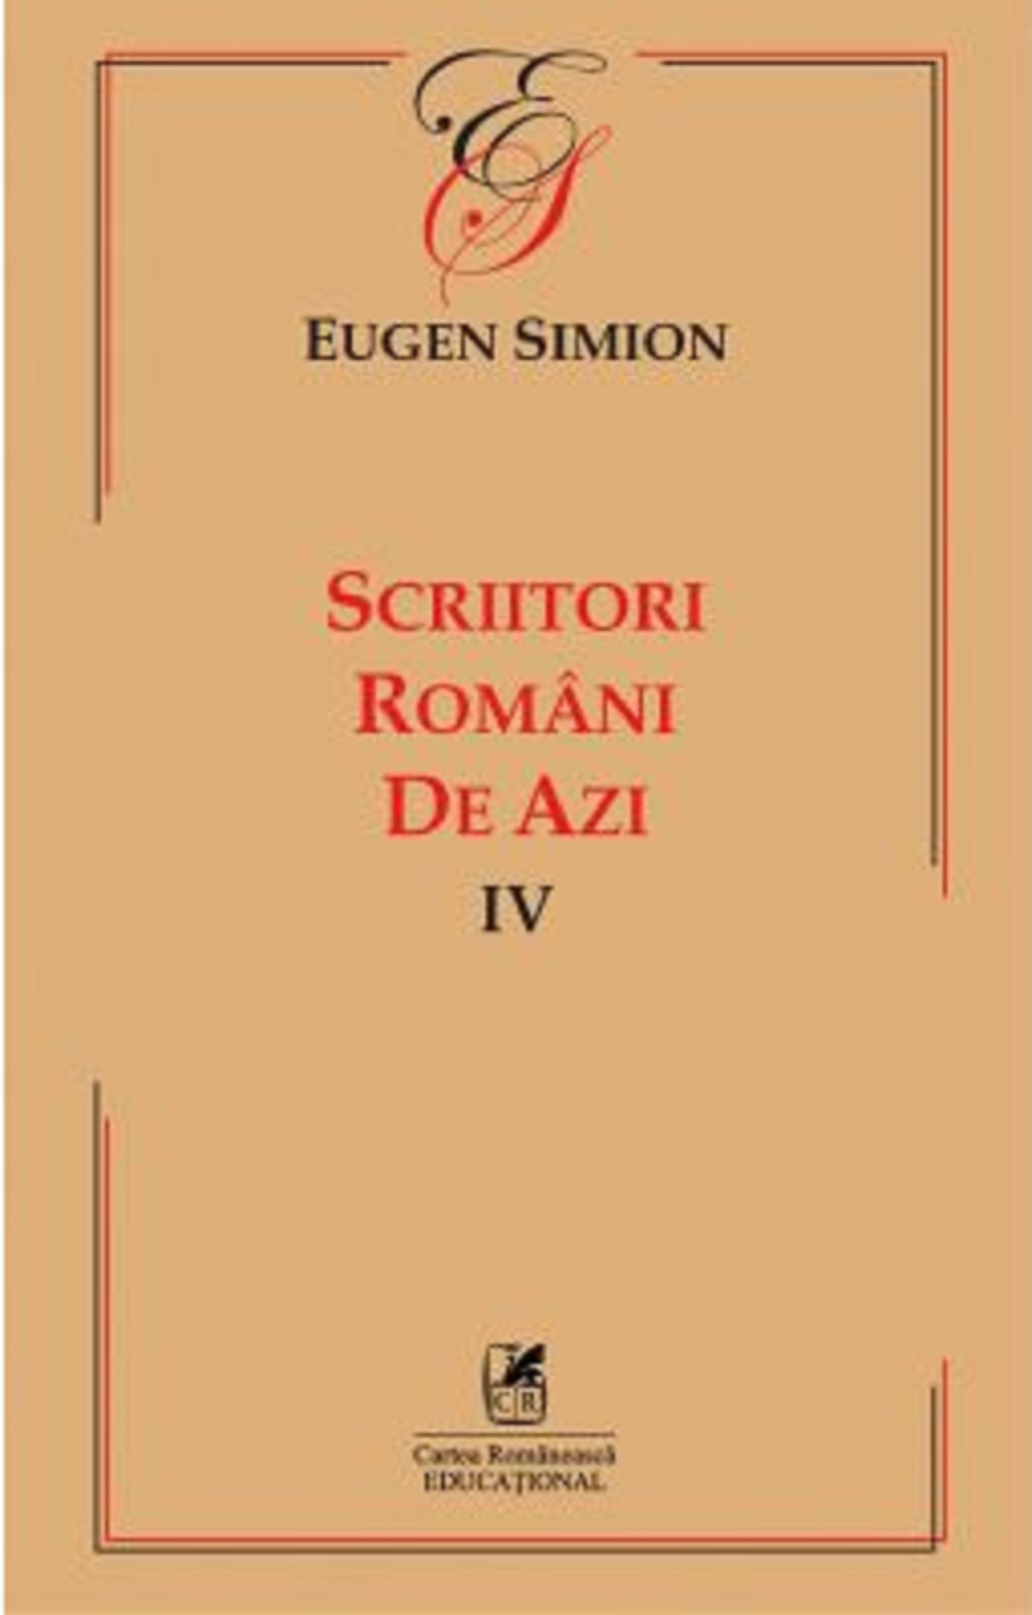 Scriitorii romani de azi IV | Eugen Simion